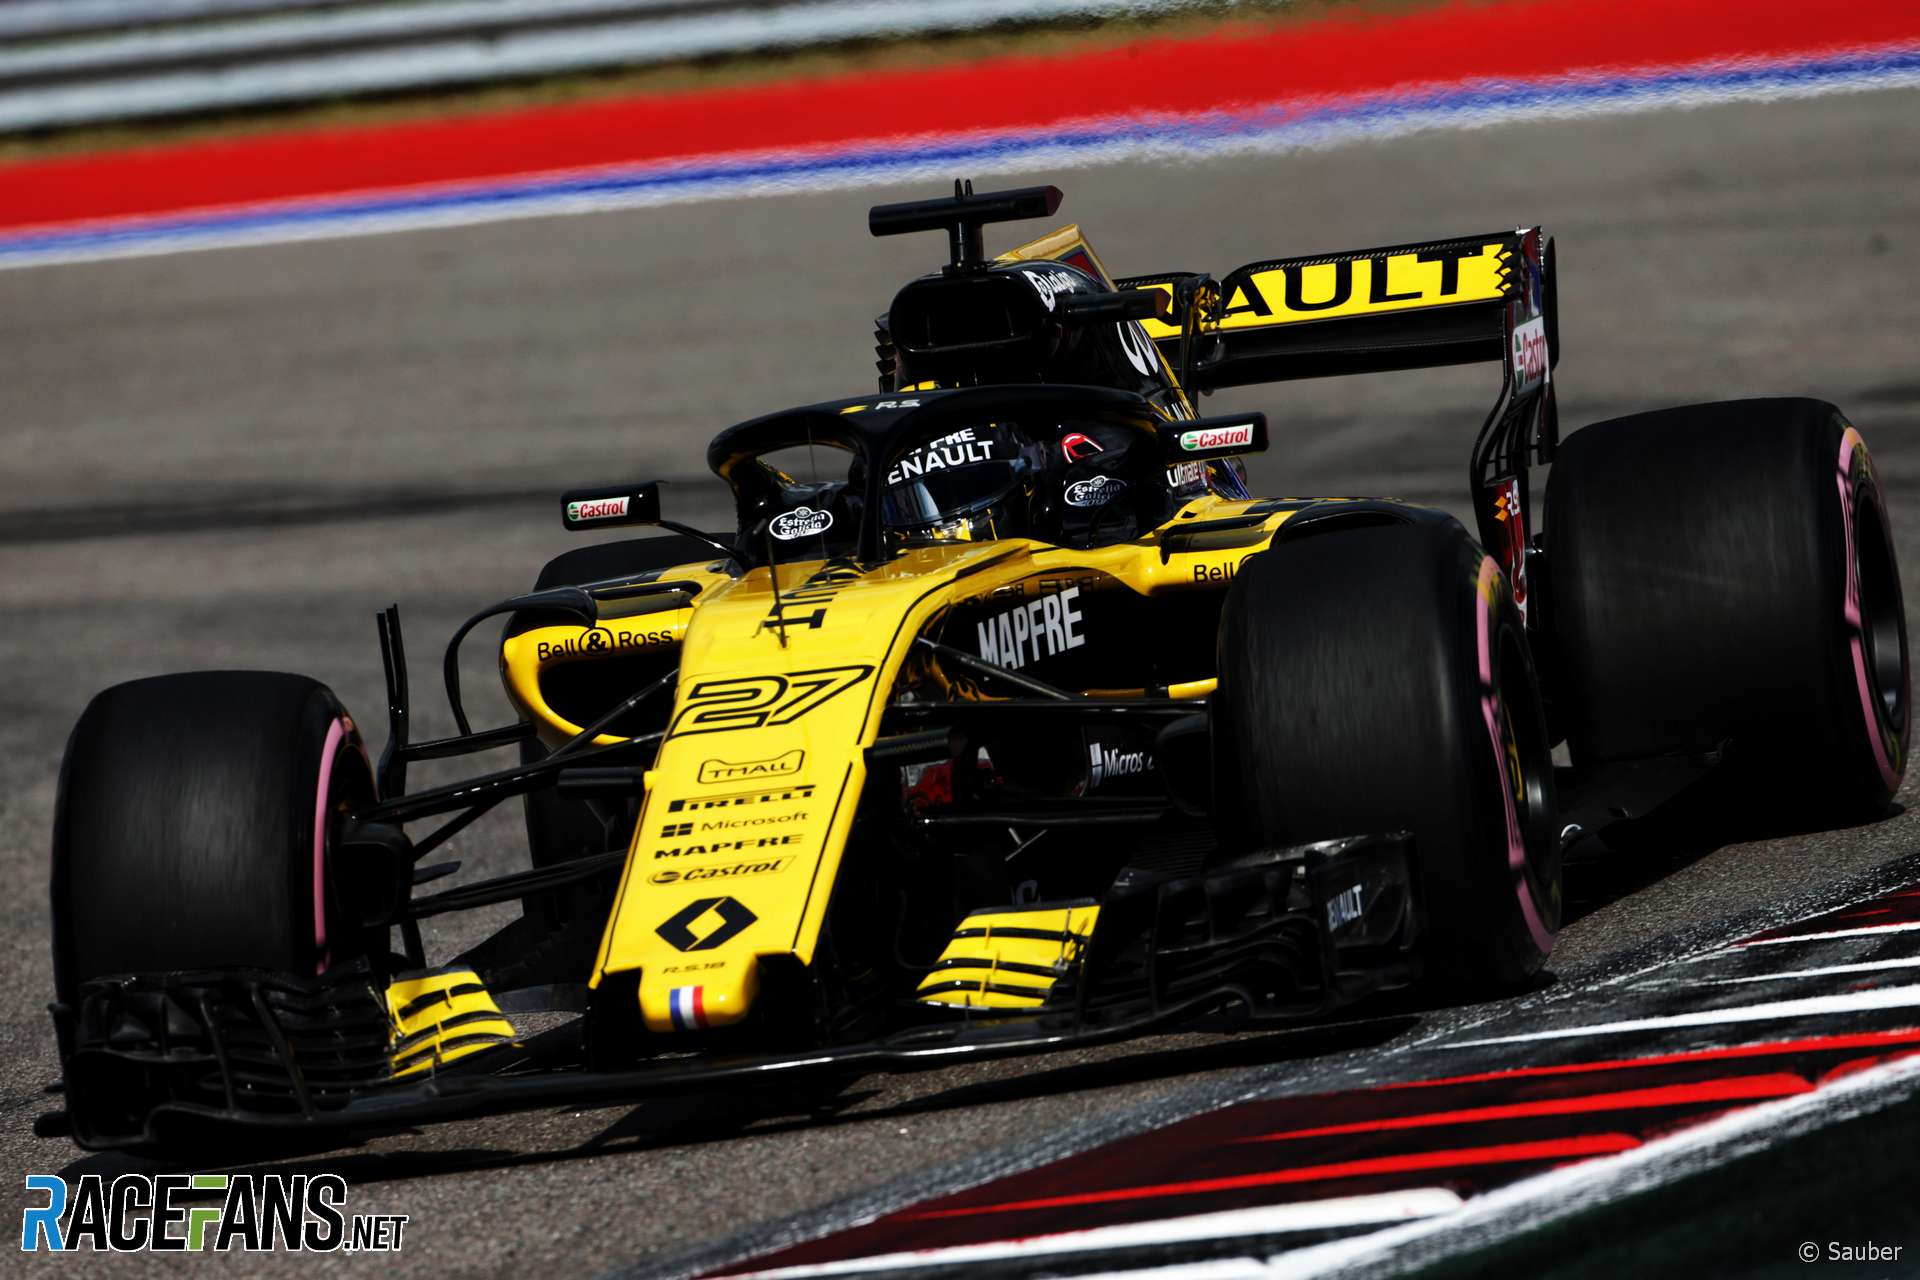 Nico Hulkenberg, Renault, Sochi Autodrom, 2018